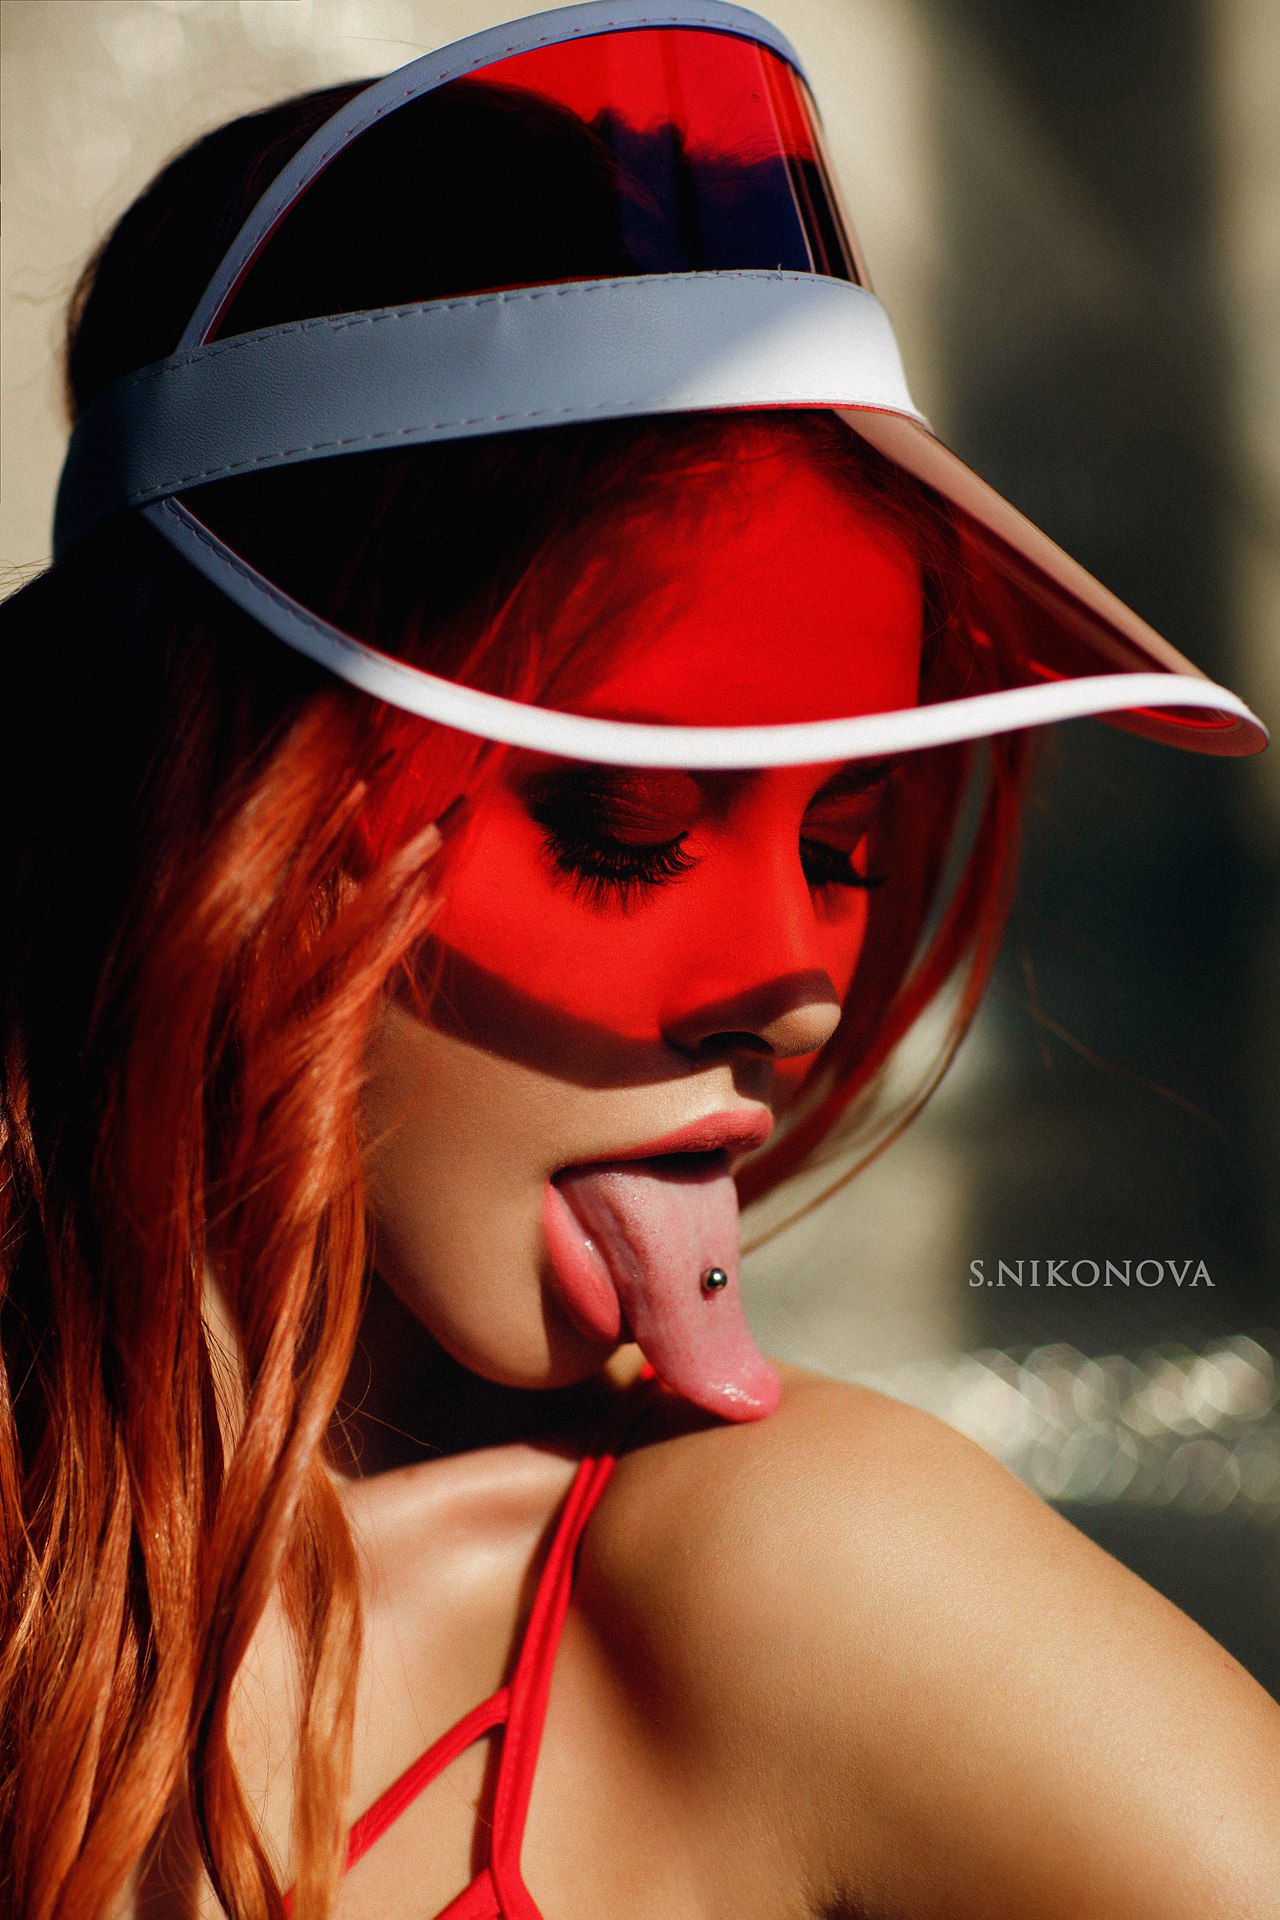 Wallpaper, S Nikonova, women, model, face, tongue out, pierced tongue, red 1280x1920